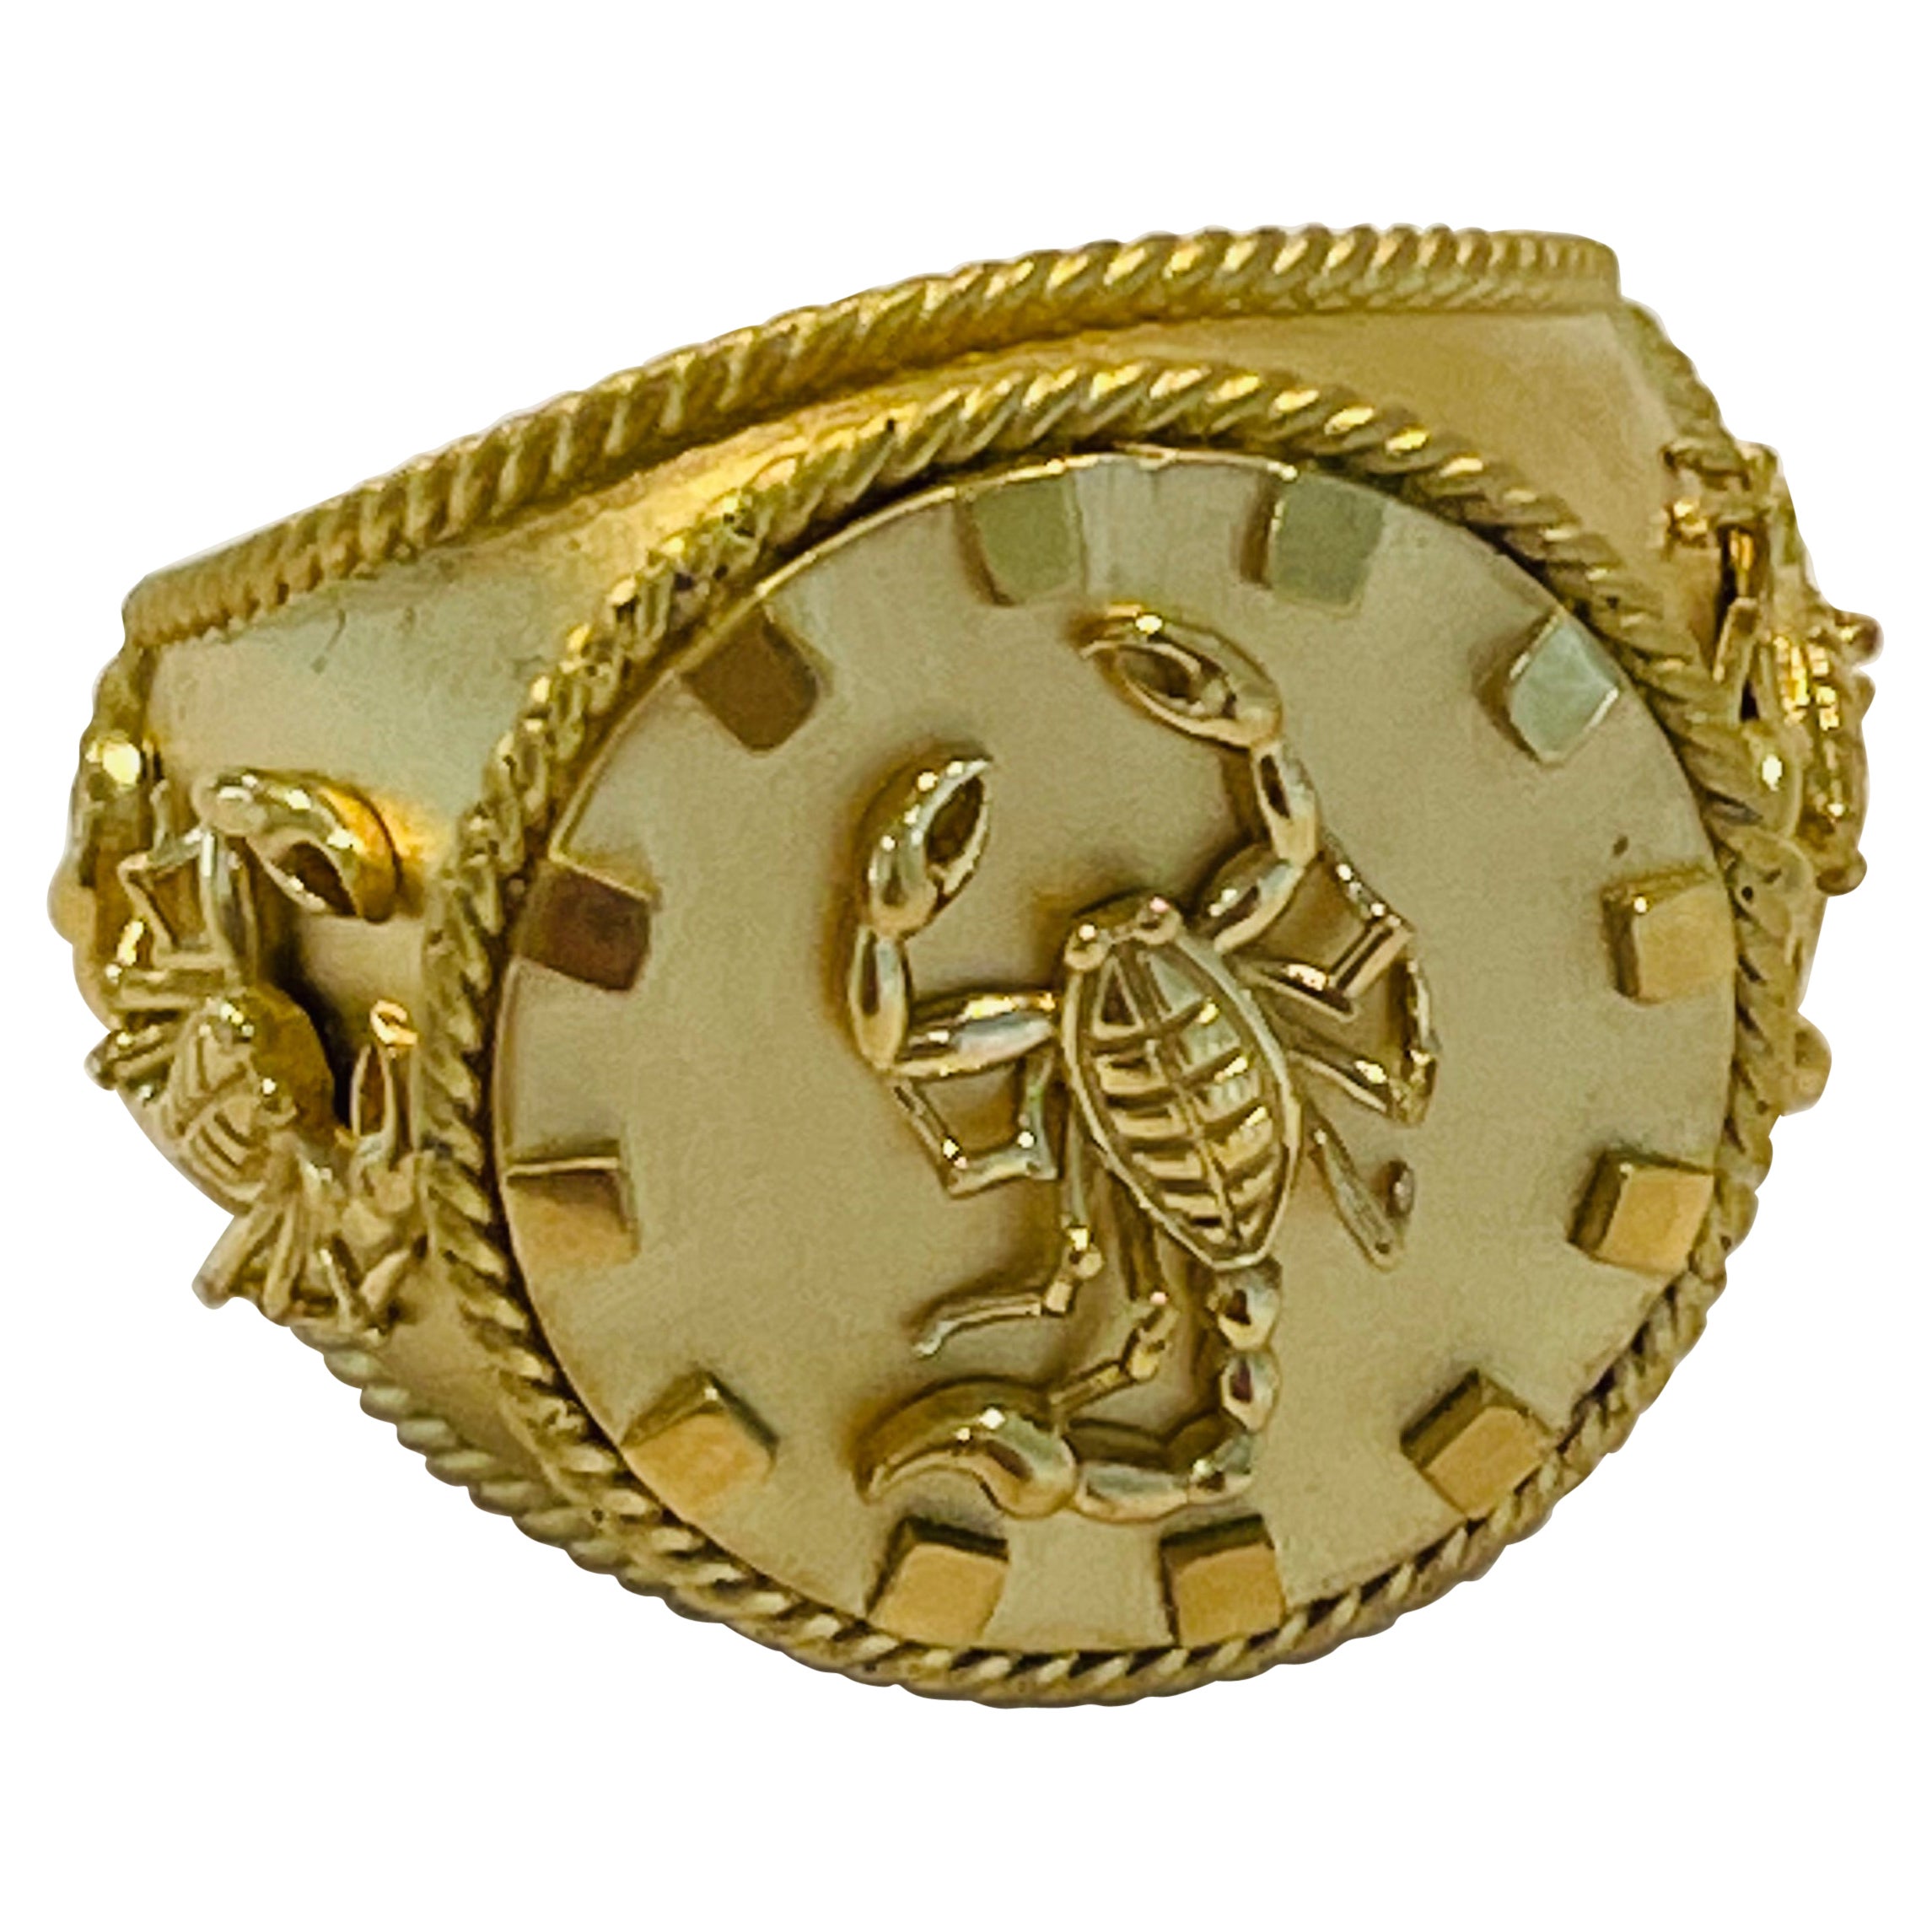 Zodiac Scorpion Ring in 18k Gold by Tagili